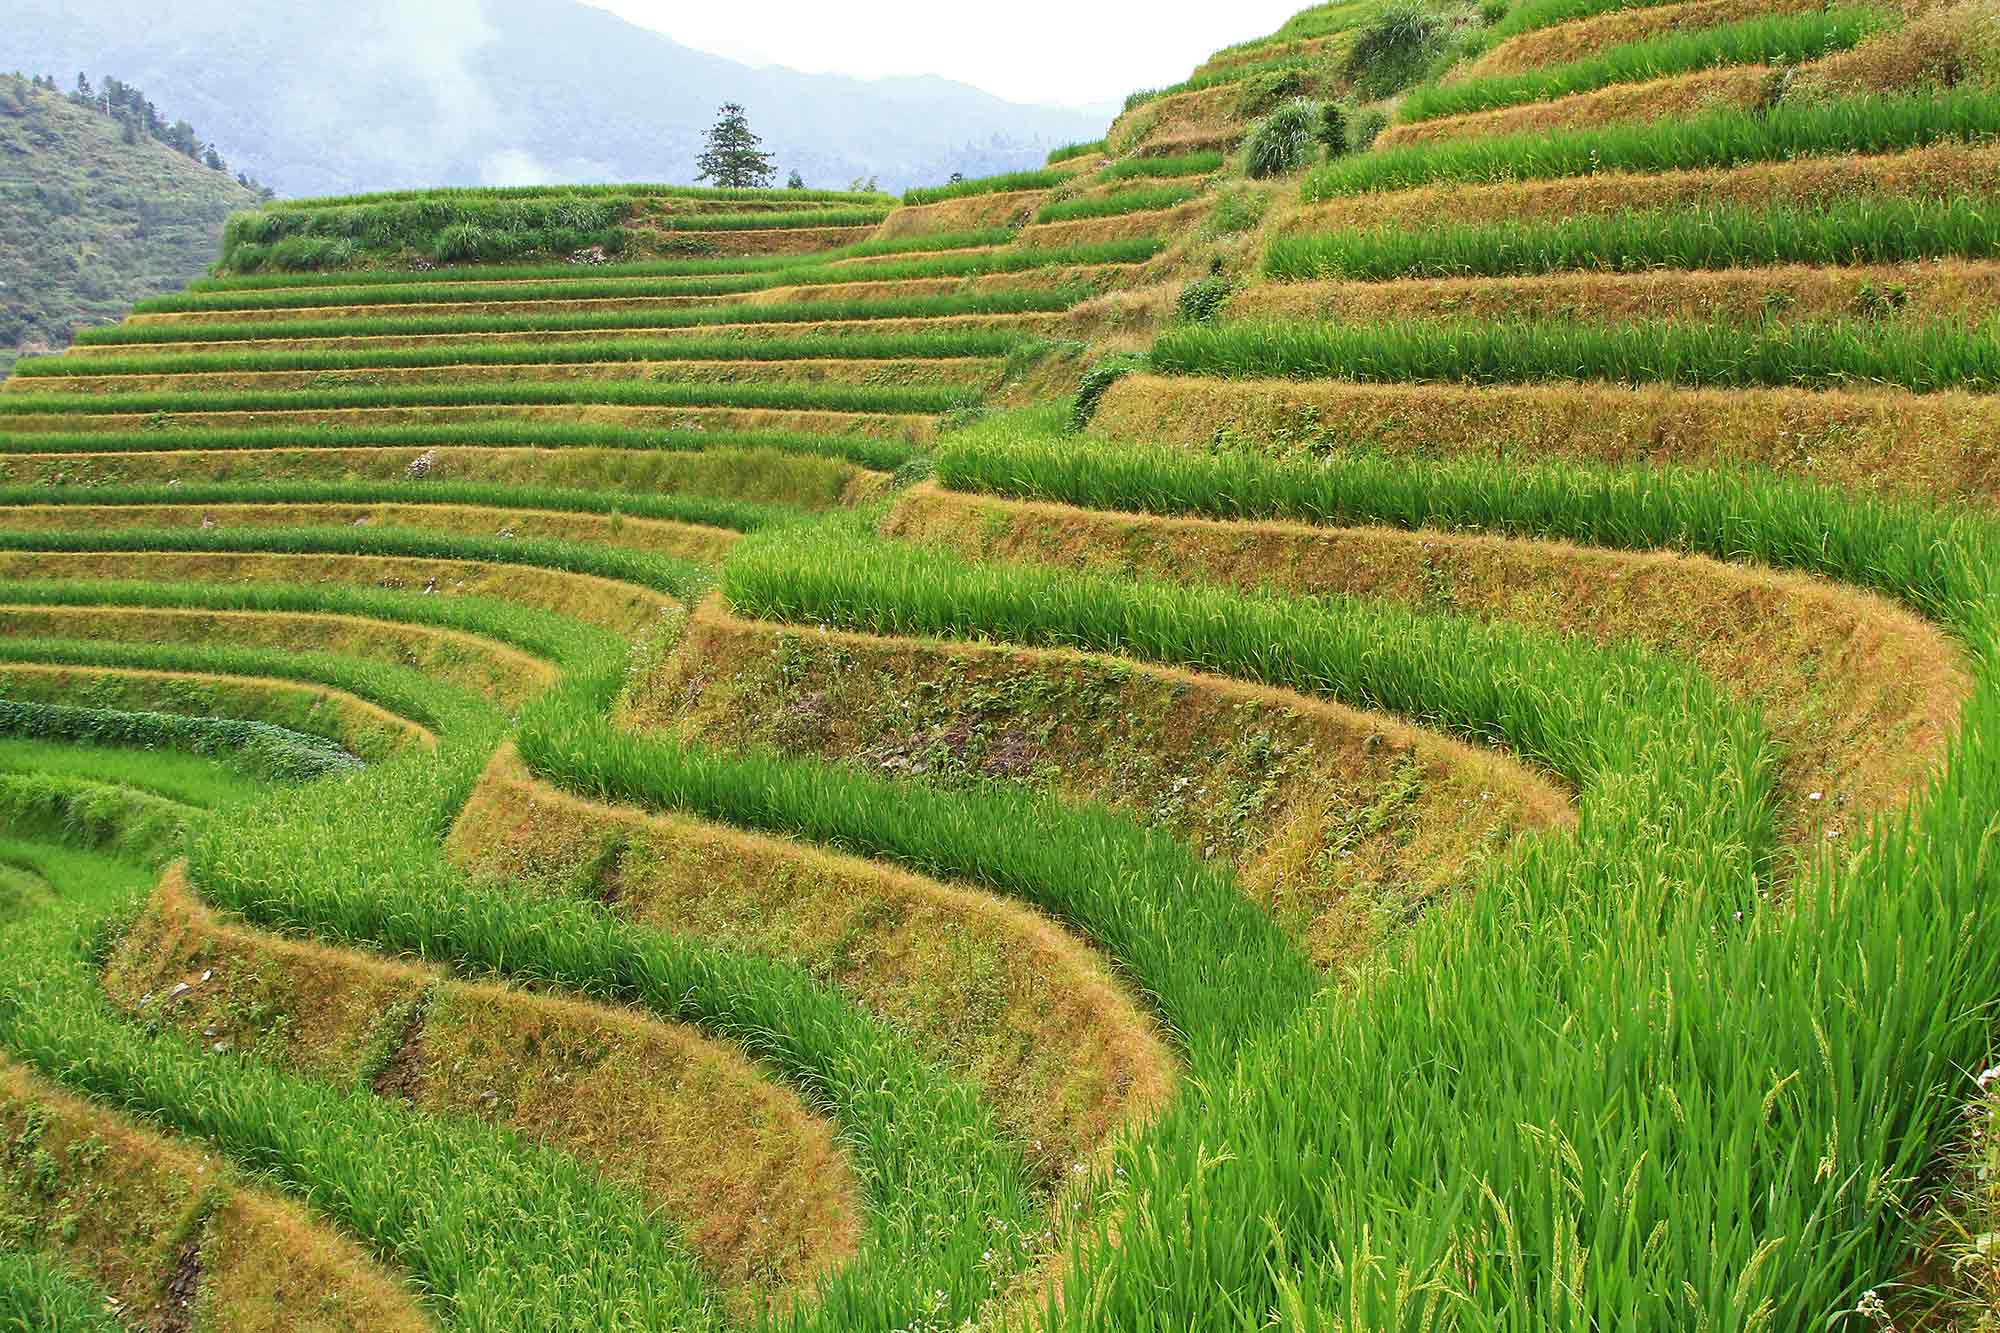 The Dragon's Backbone Rice Terraces in Guanxi, China. © Ulli Maier & Nisa Maier